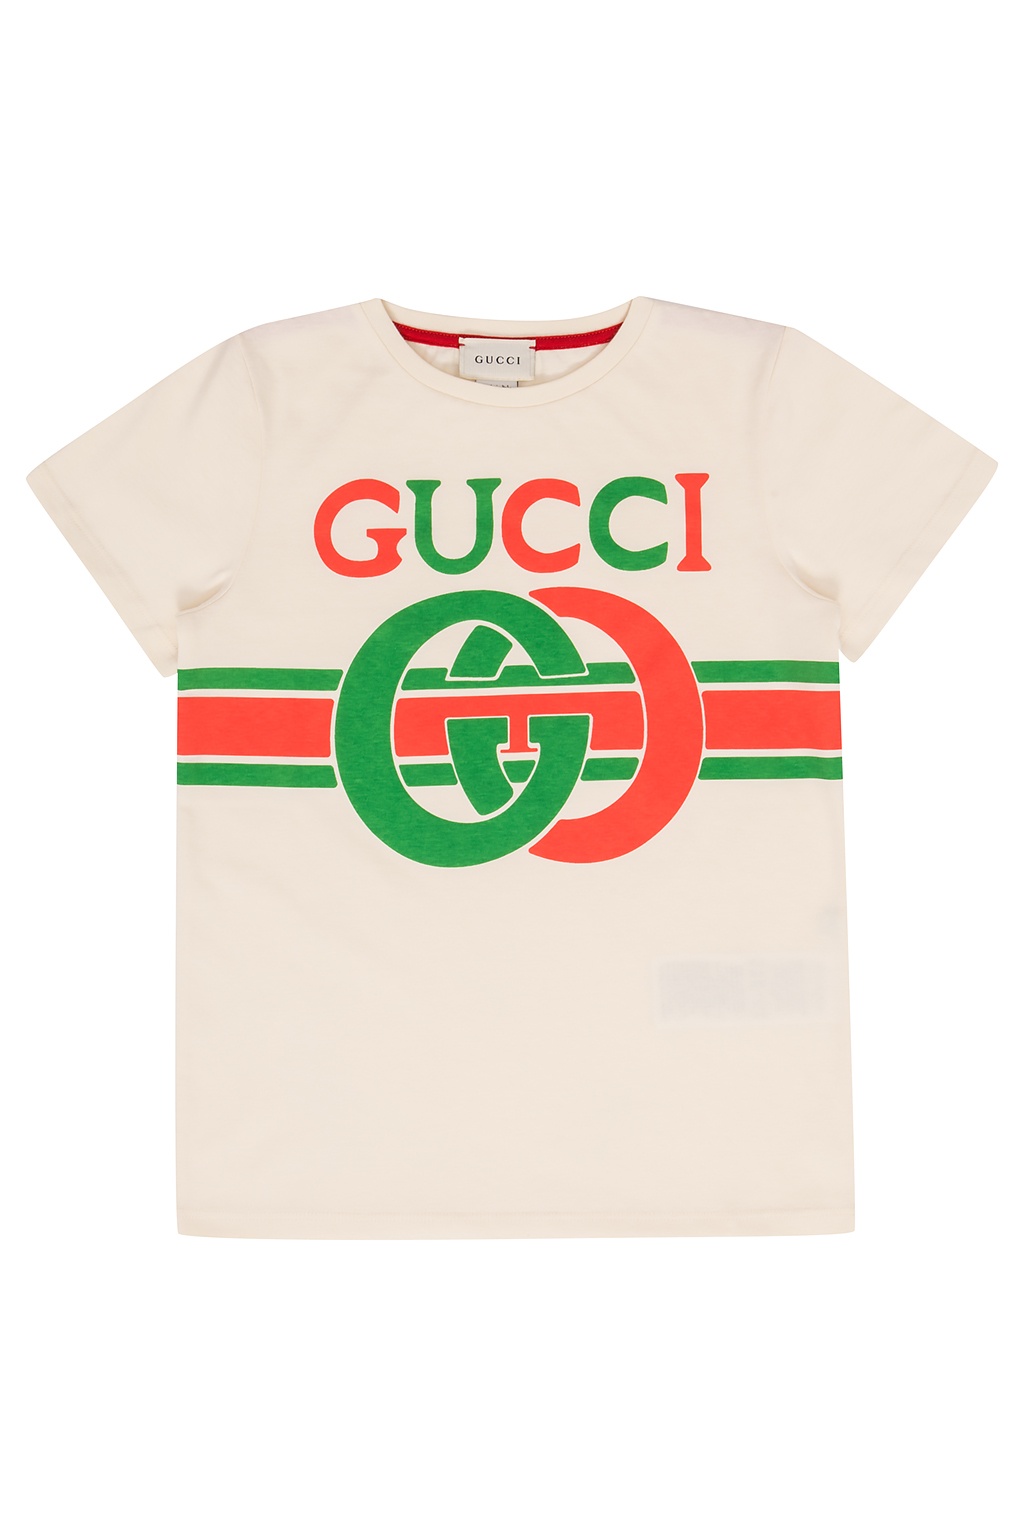 gucci youth t shirt